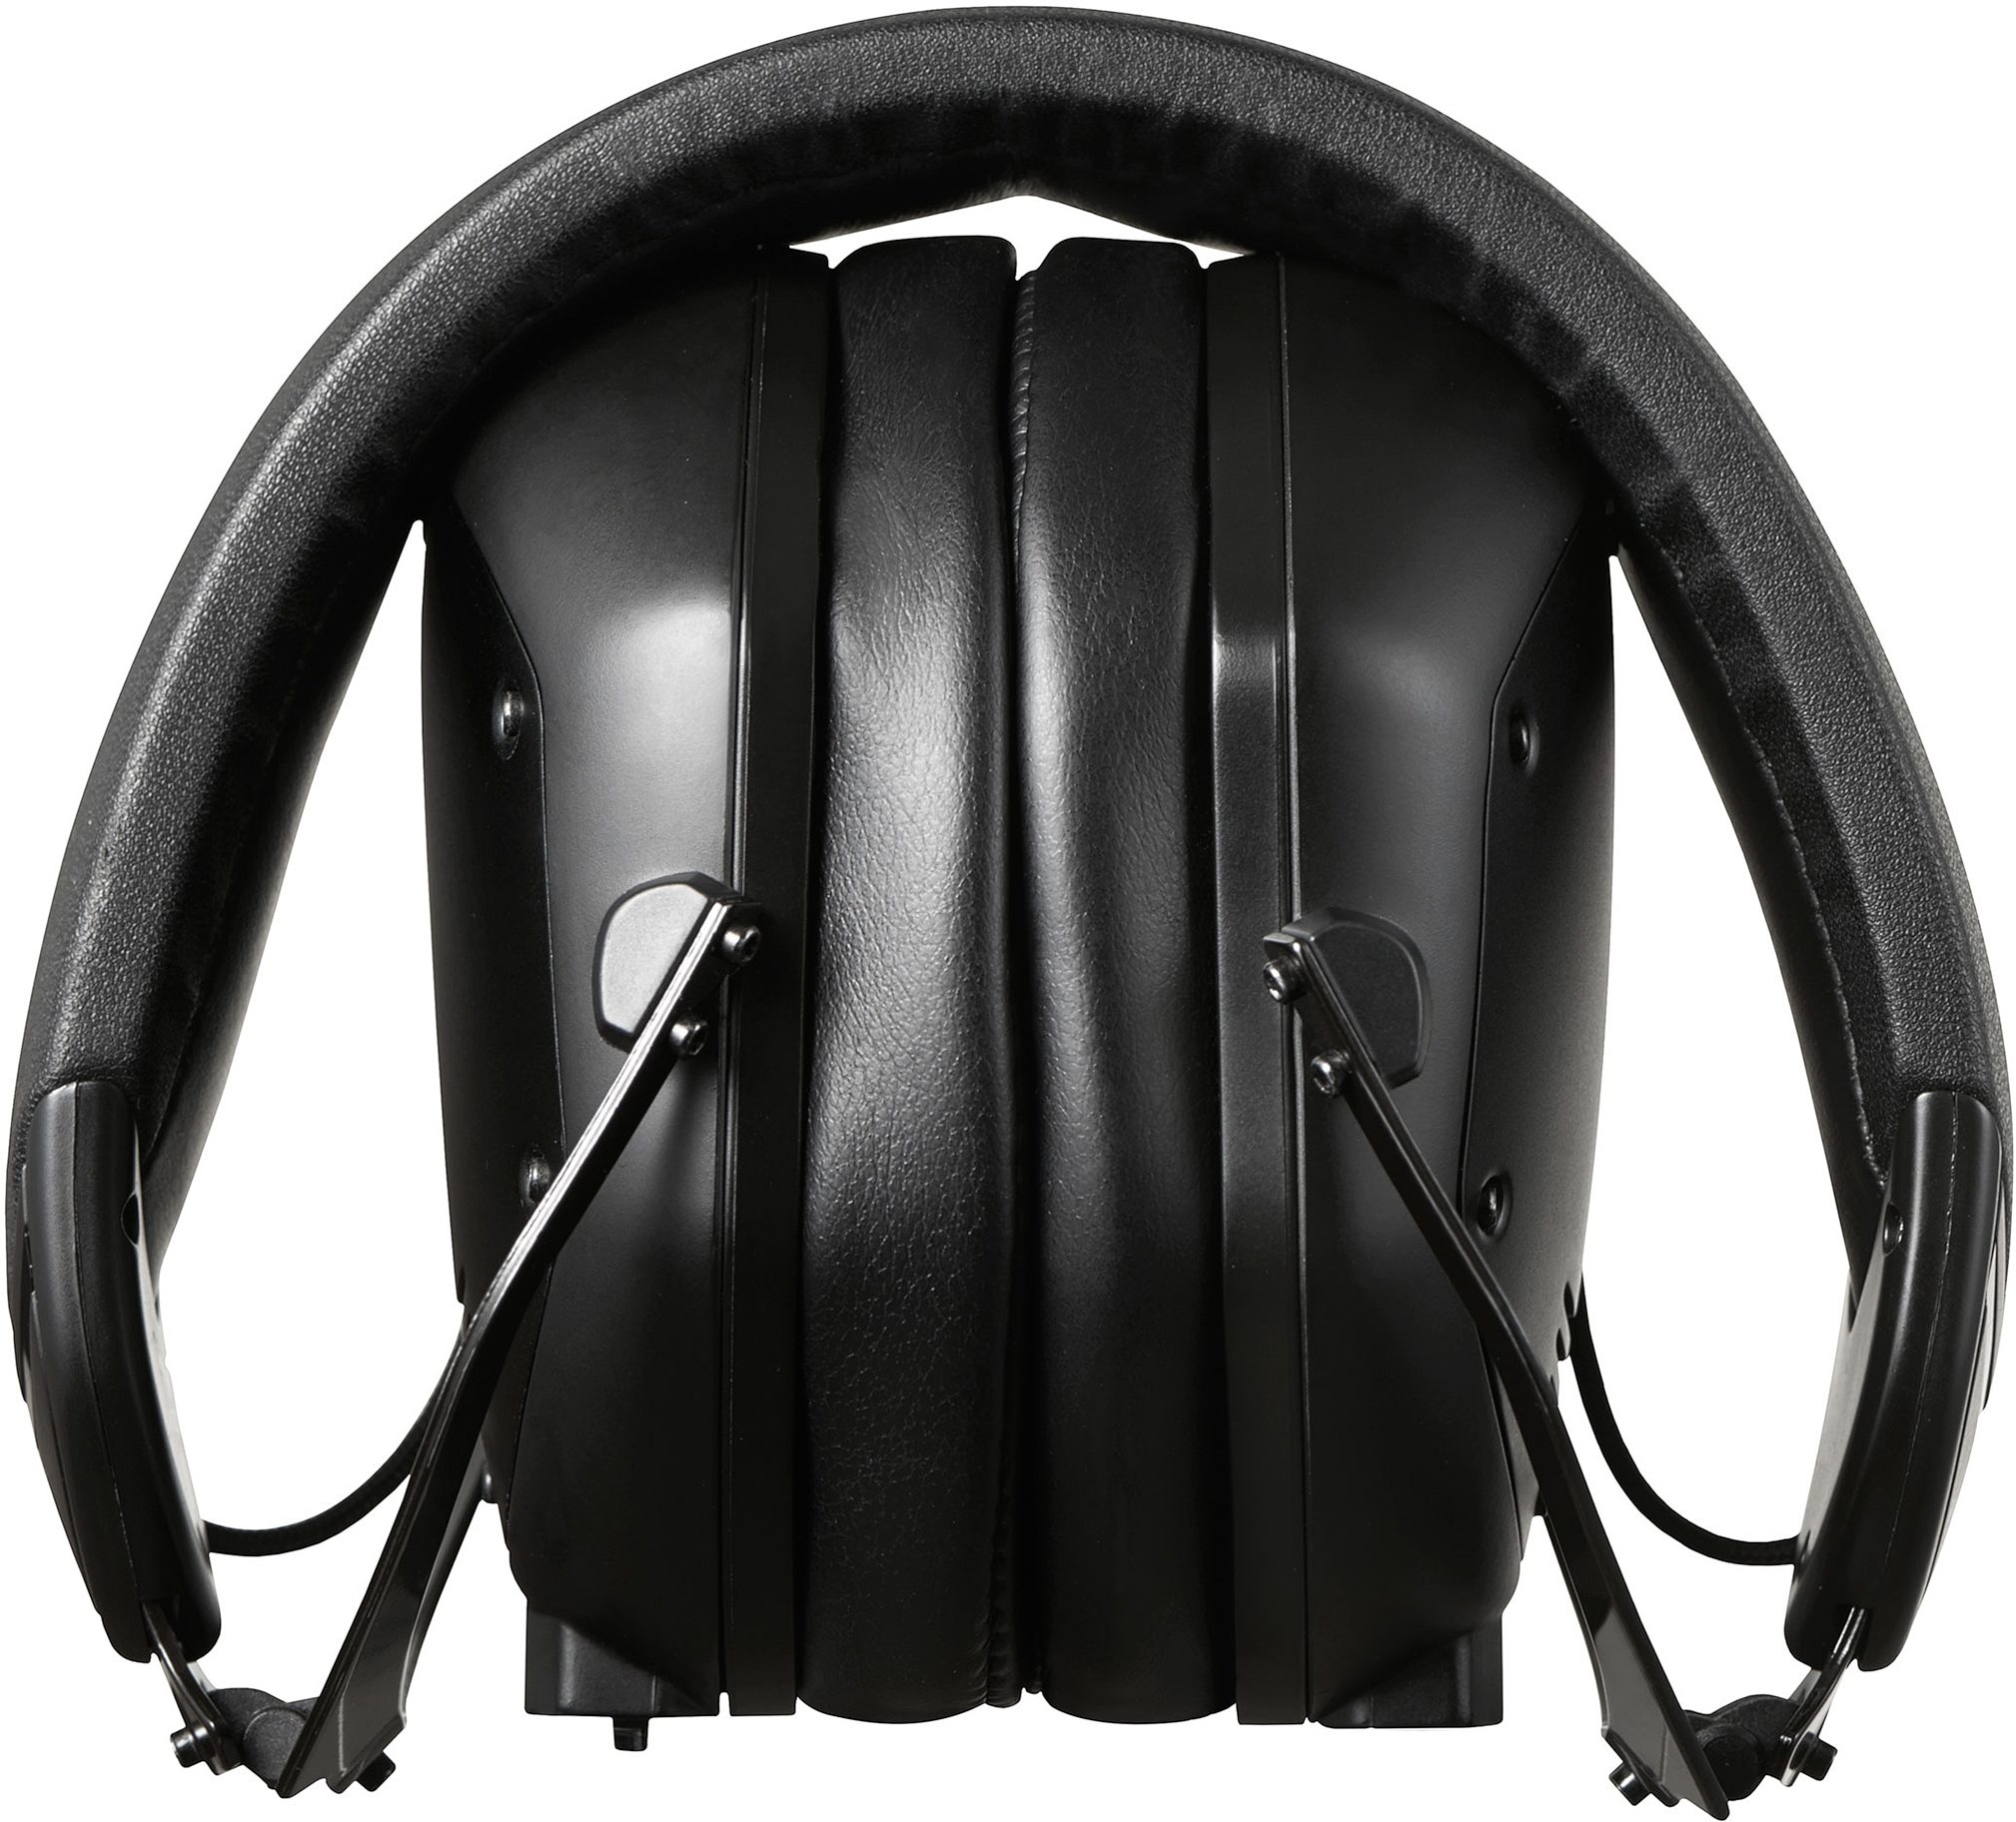 V-Moda Crossfade M-100 Master Over-Ear Headphones